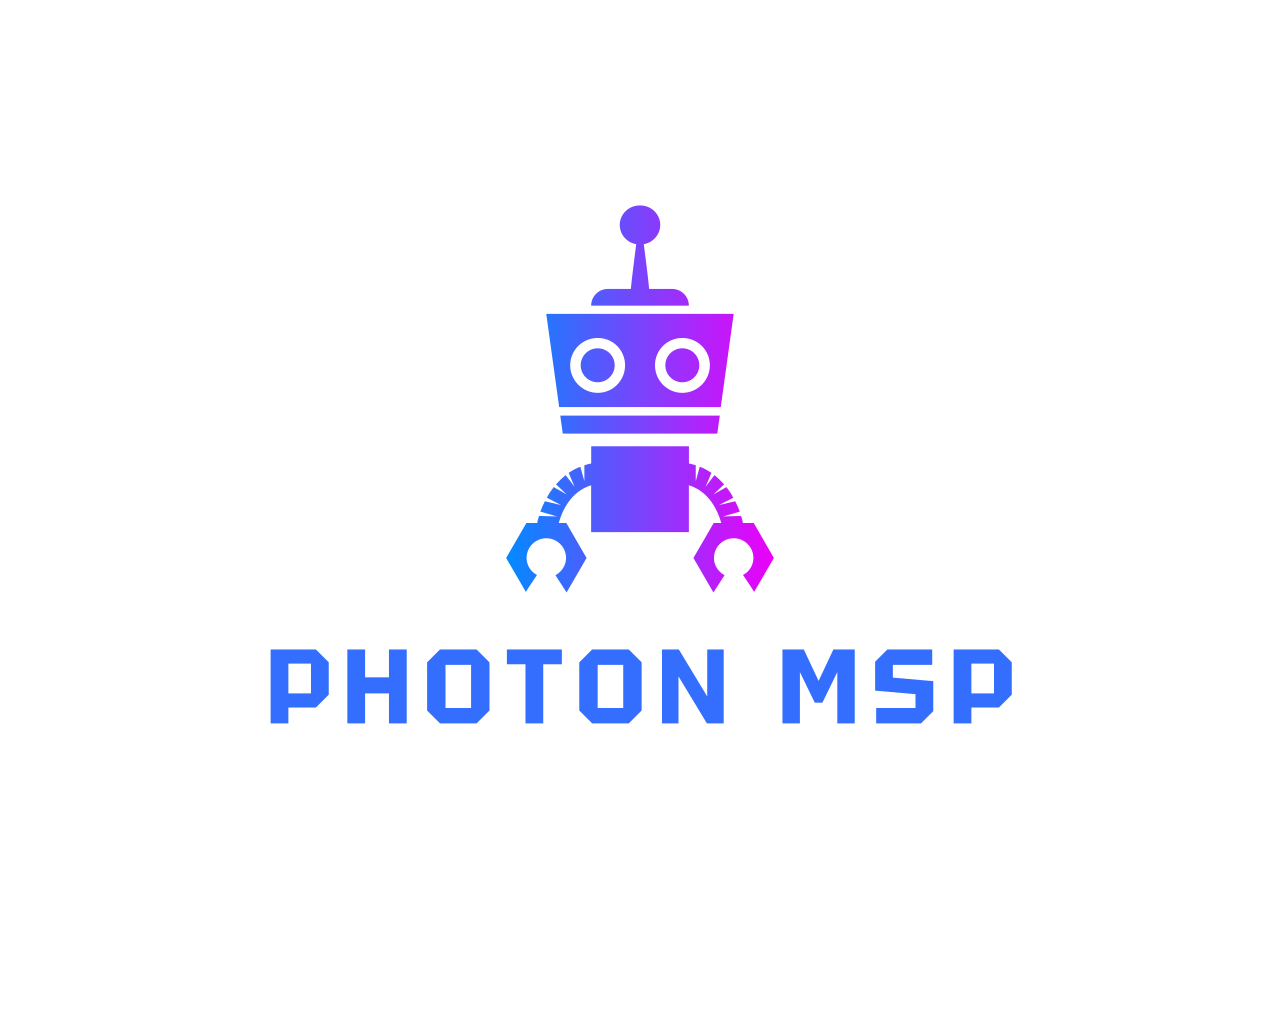 Photon MSP